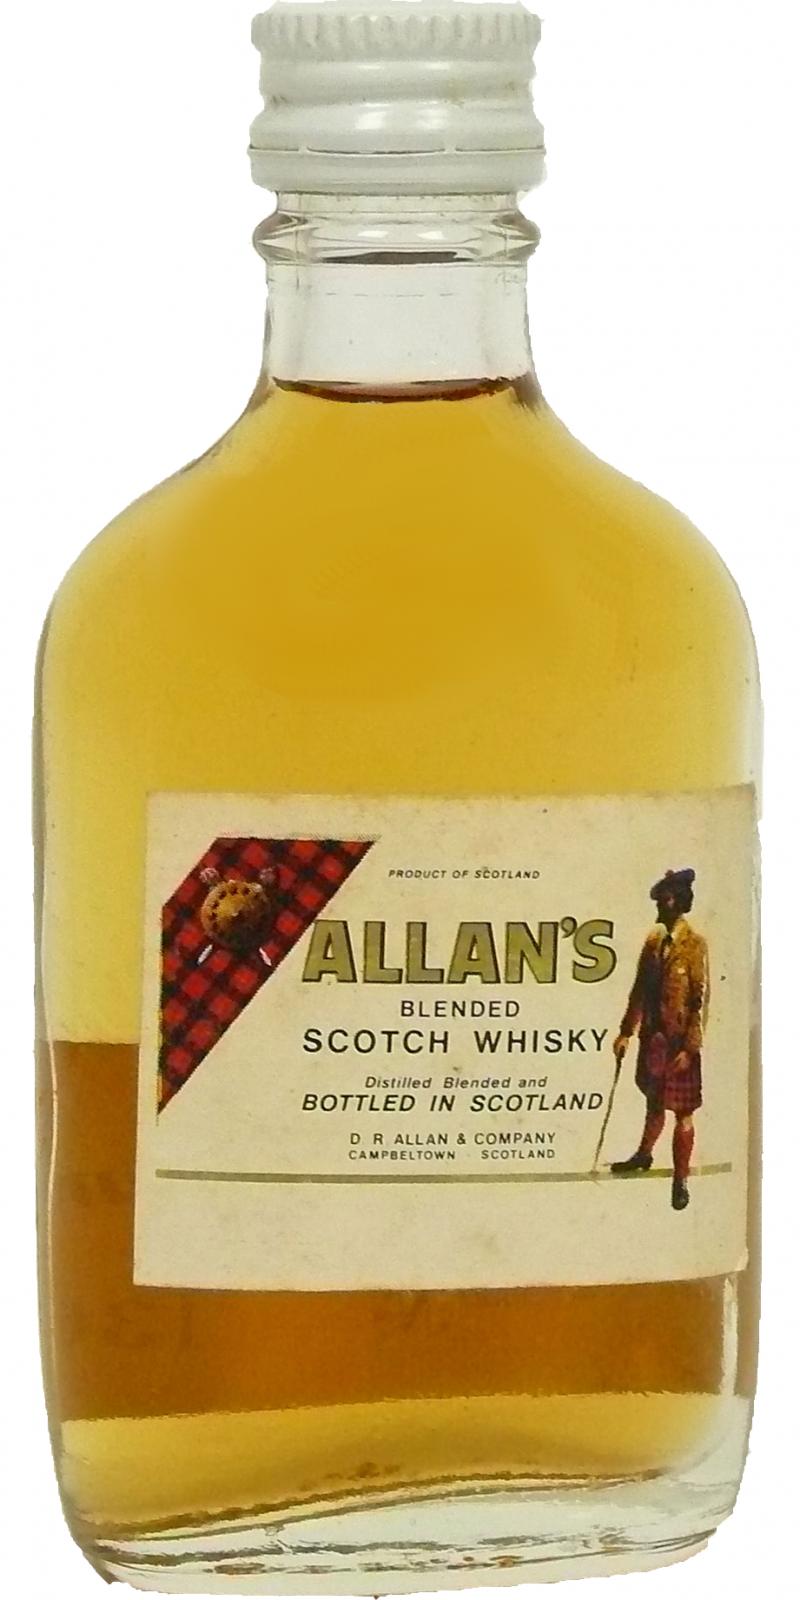 Allan's Blended Scotch Whisky